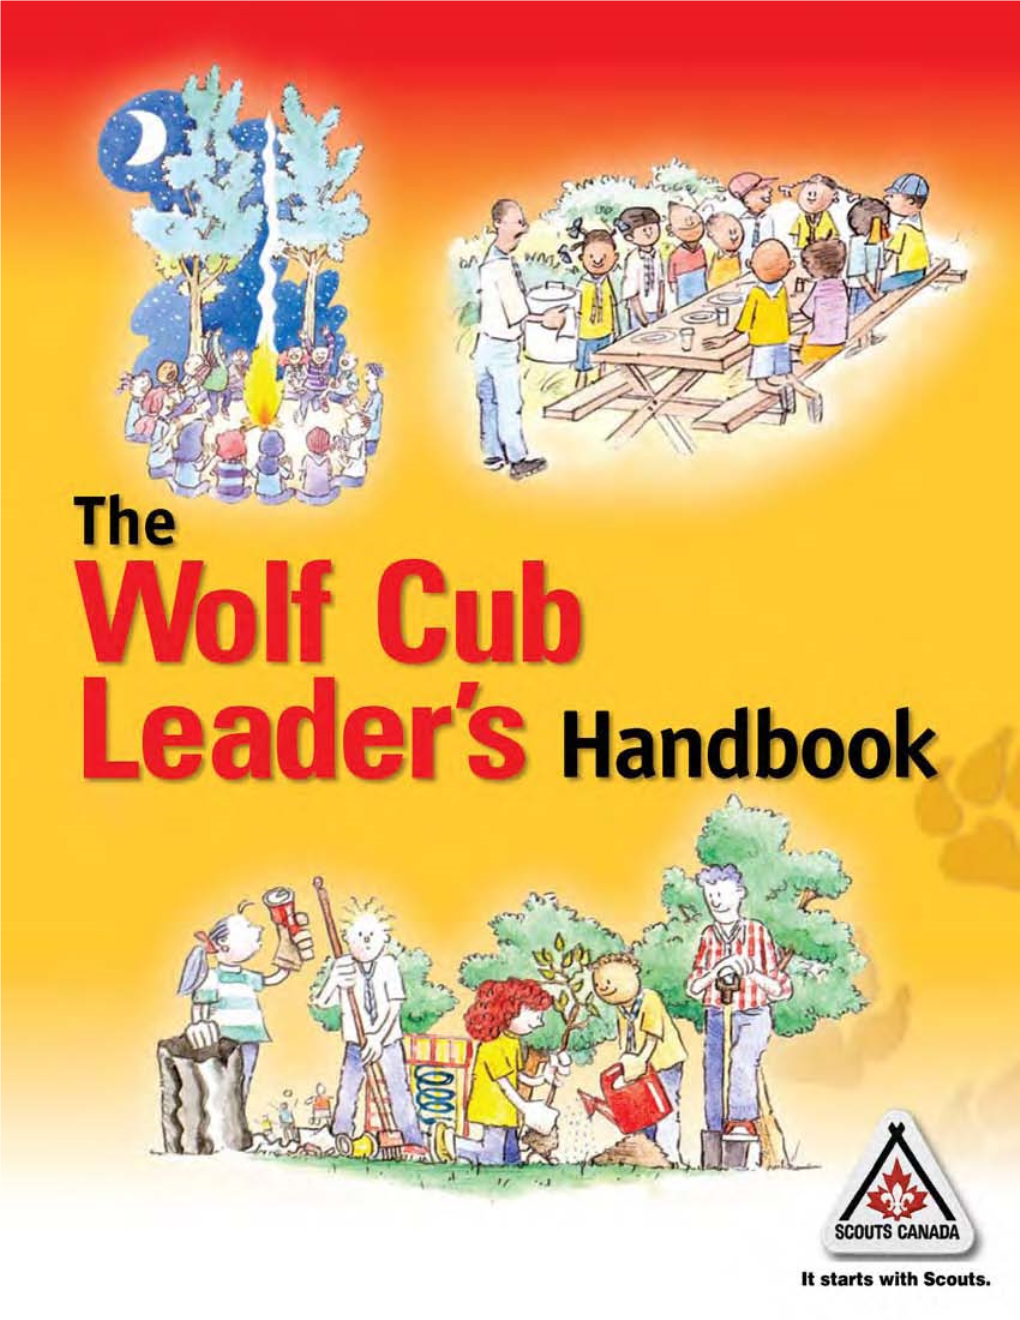 The Wolf Cub Leader's Handbook